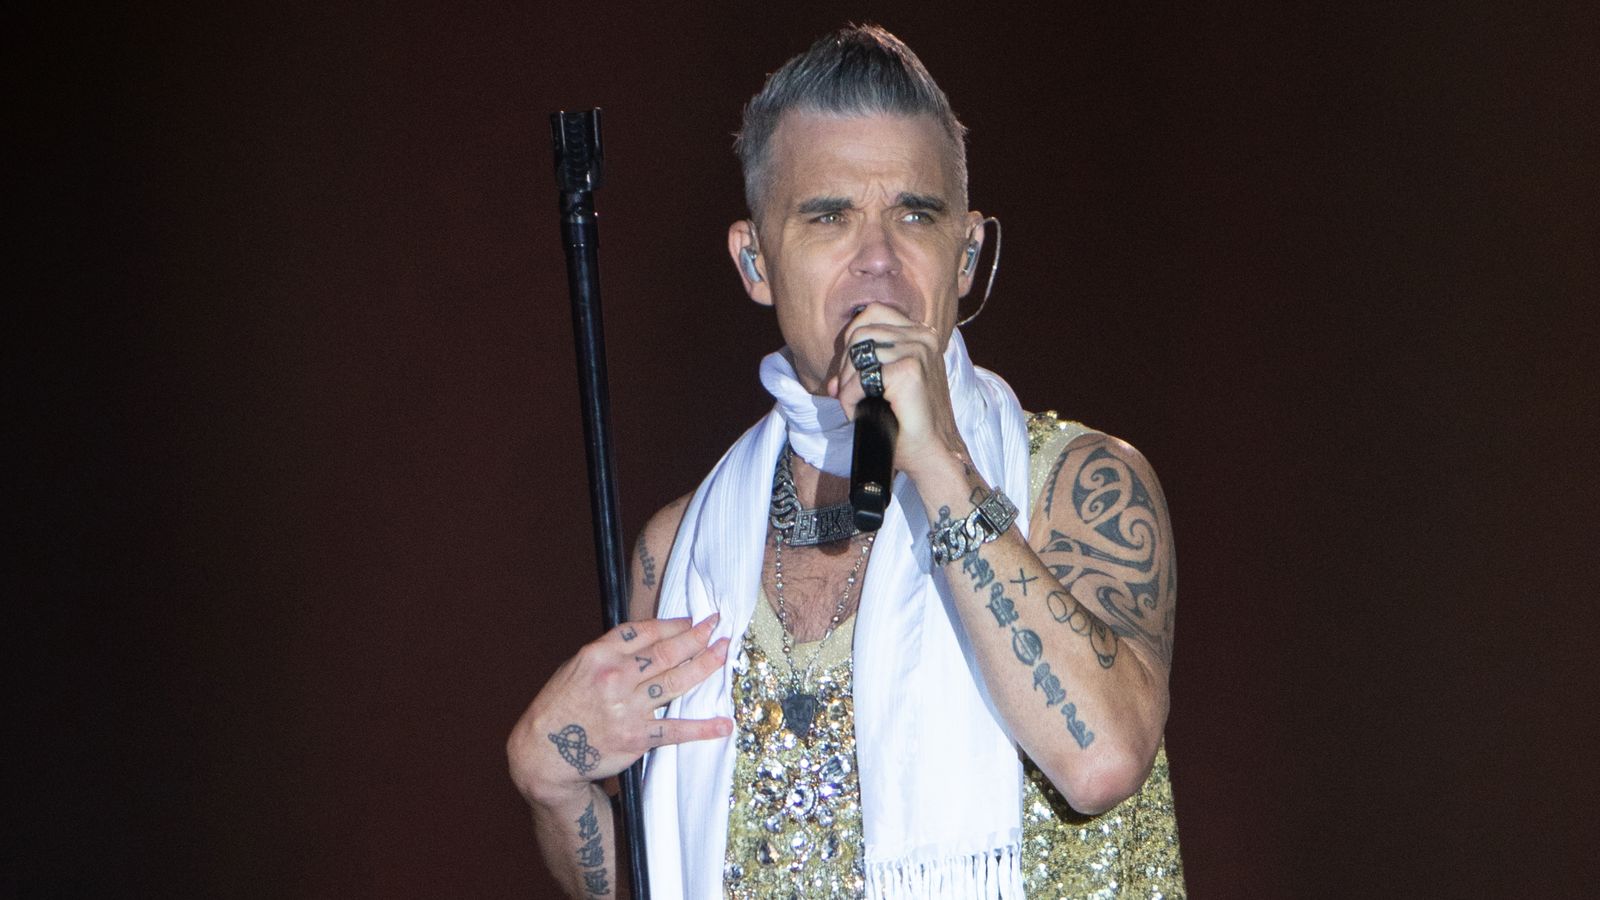 Robbie Williams fan dies after concert fall in Sydney